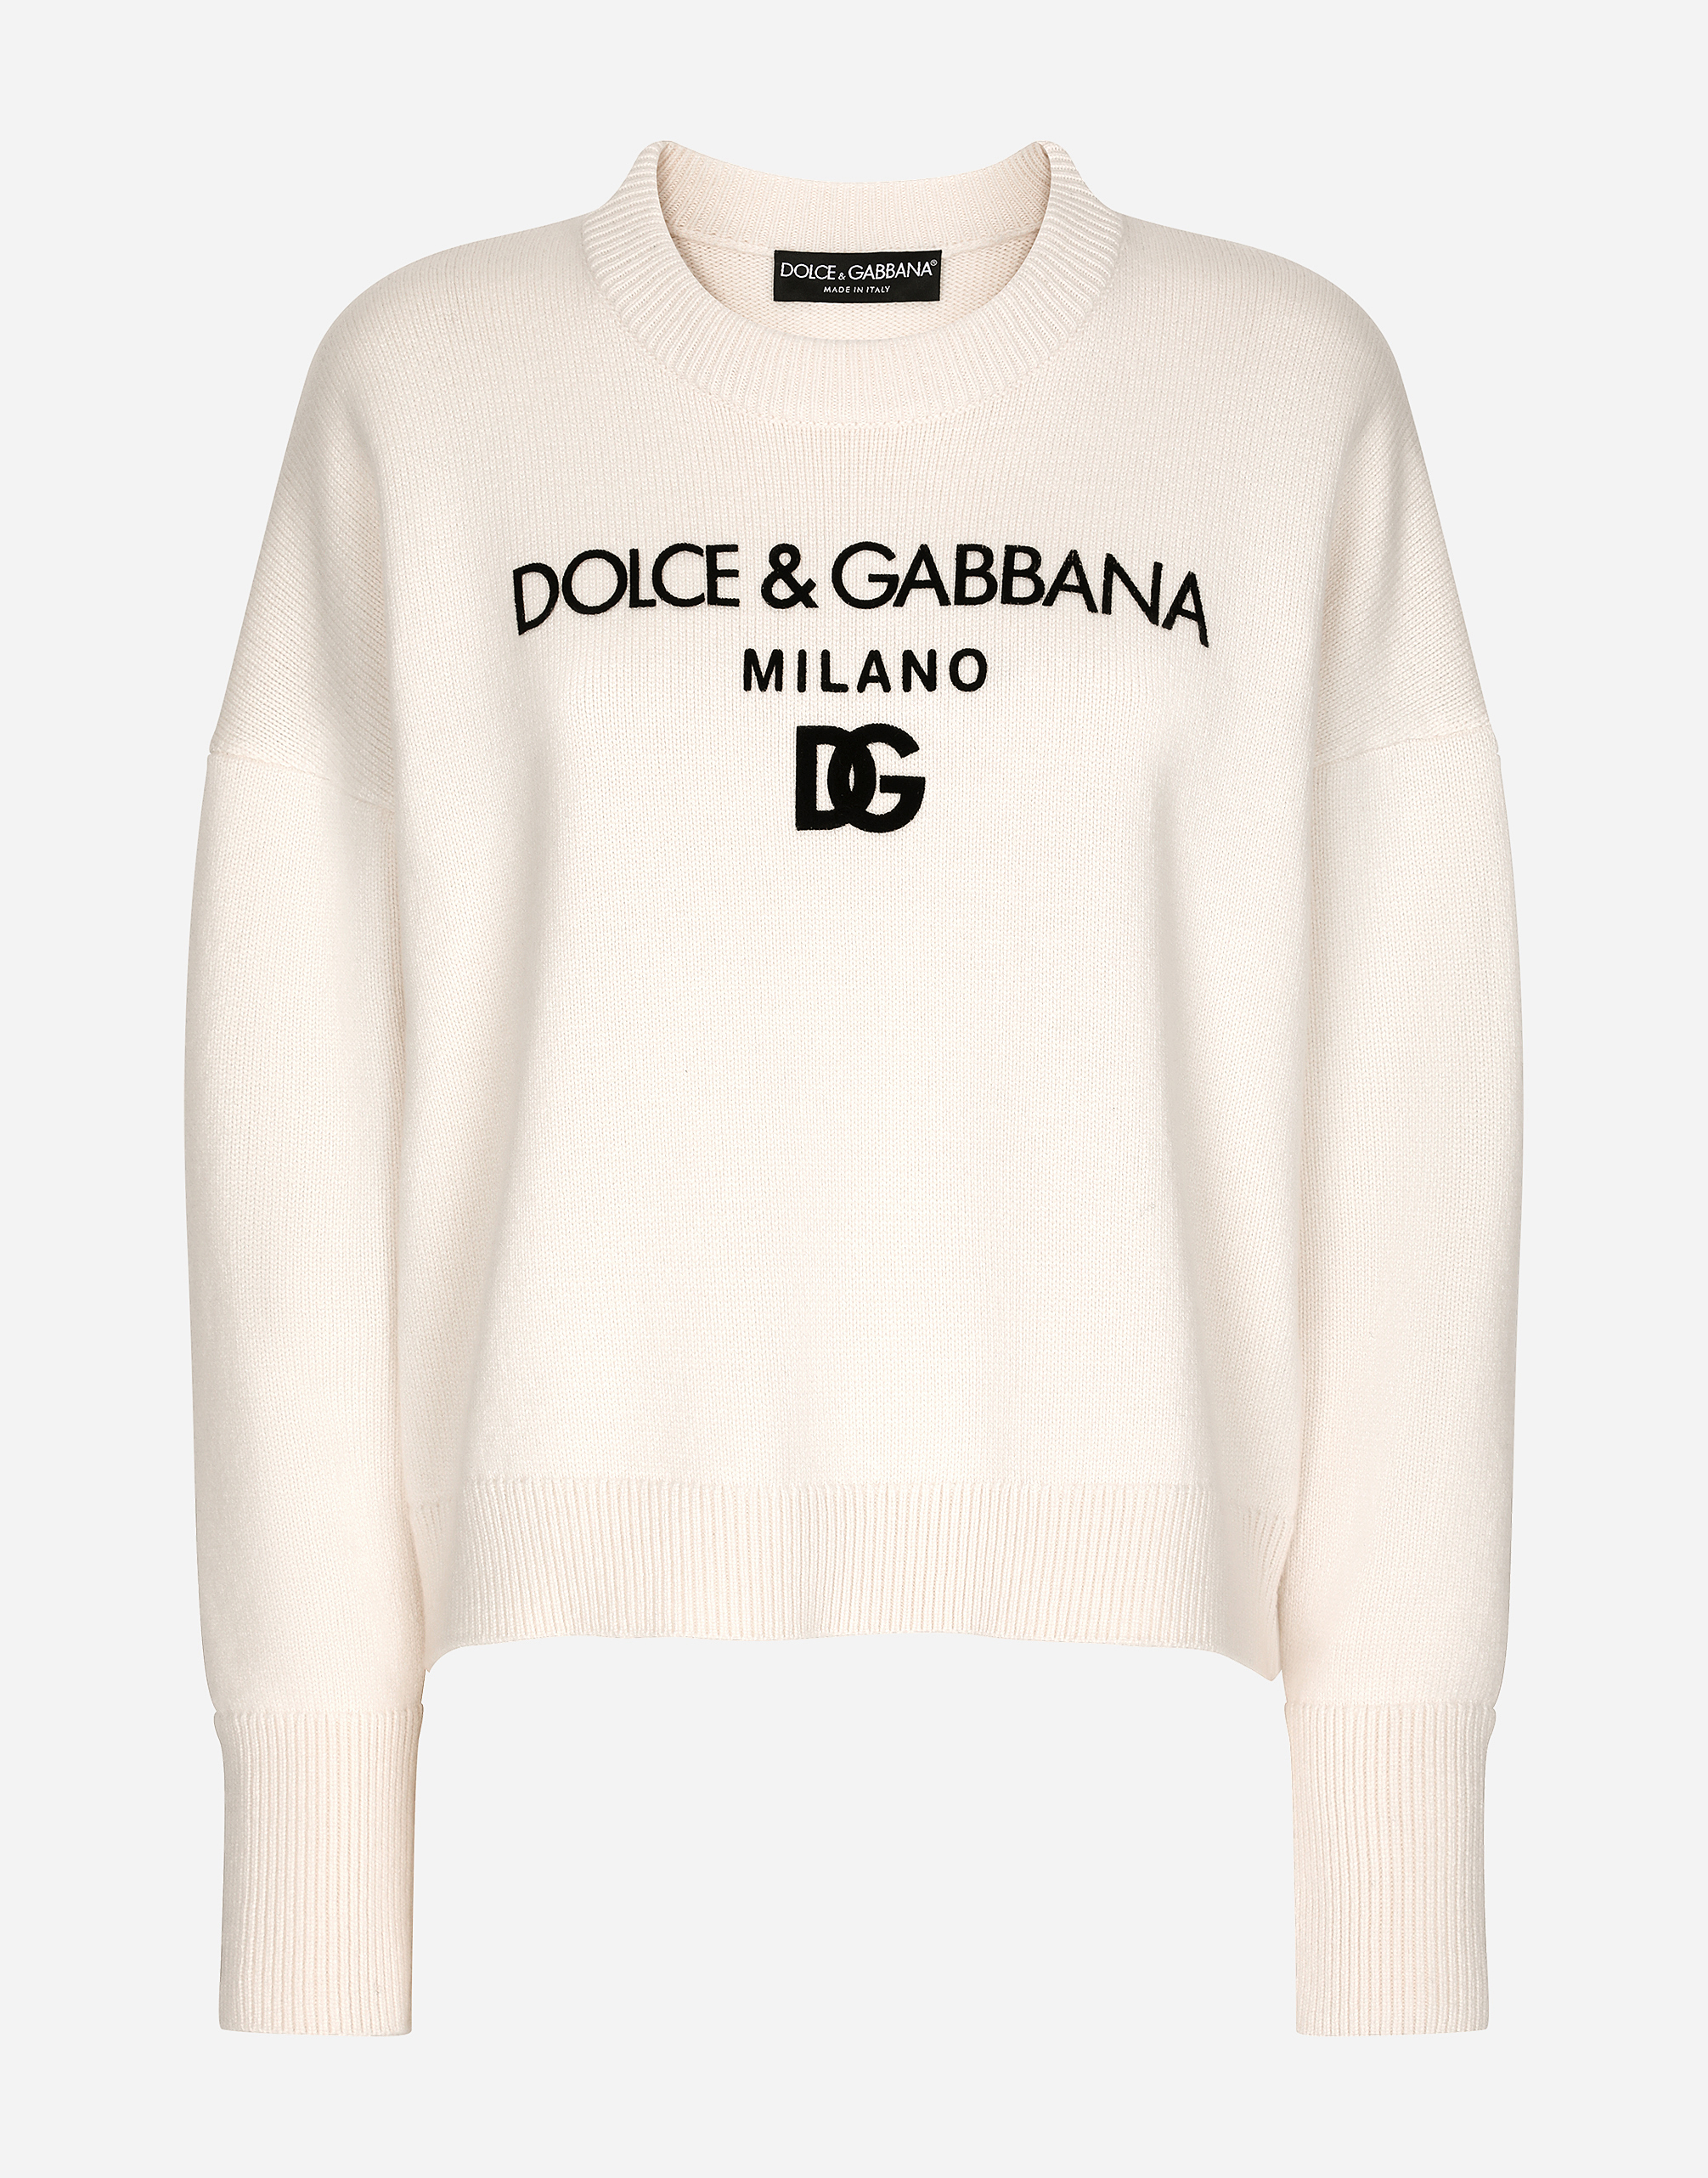 Dolce & Gabbana Cashmere Jumper With Flocked Dg Logo In White